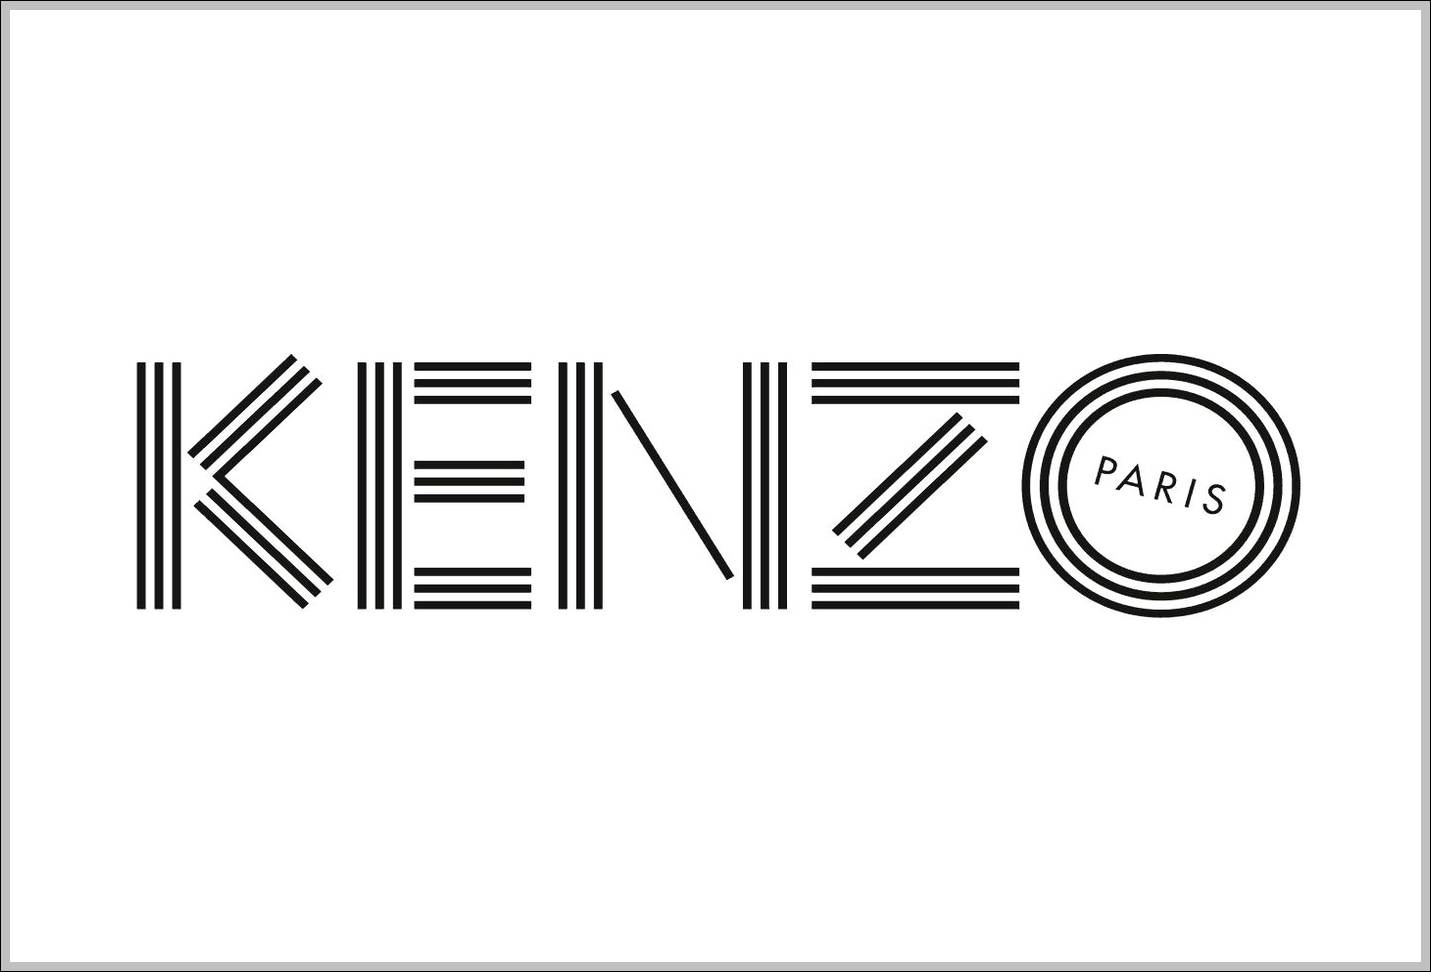 Kenzo logo black line